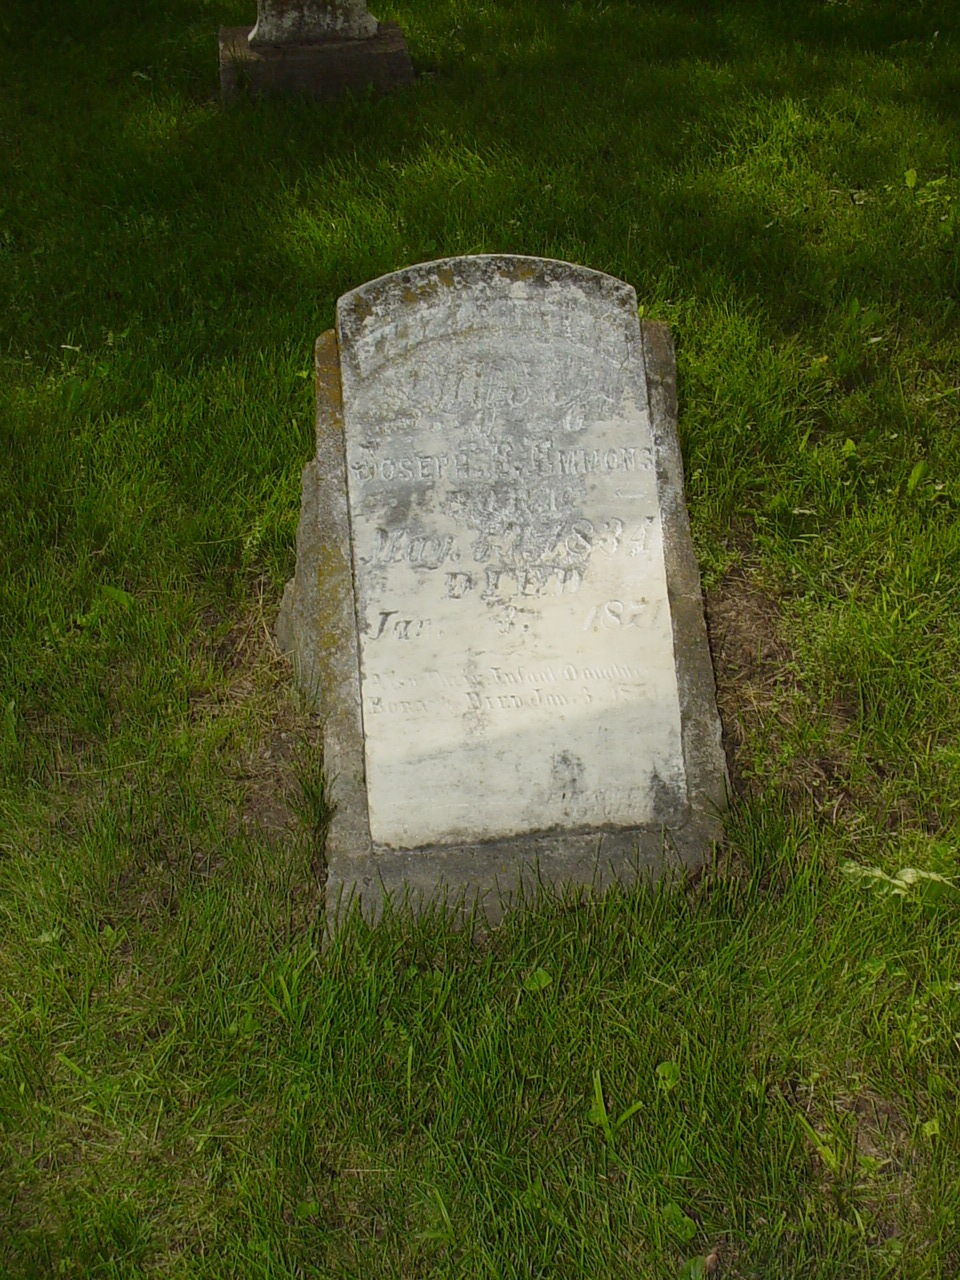  Joseph Emmons Headstone Photo, Old Prospect Methodist Cemetery, Callaway County genealogy